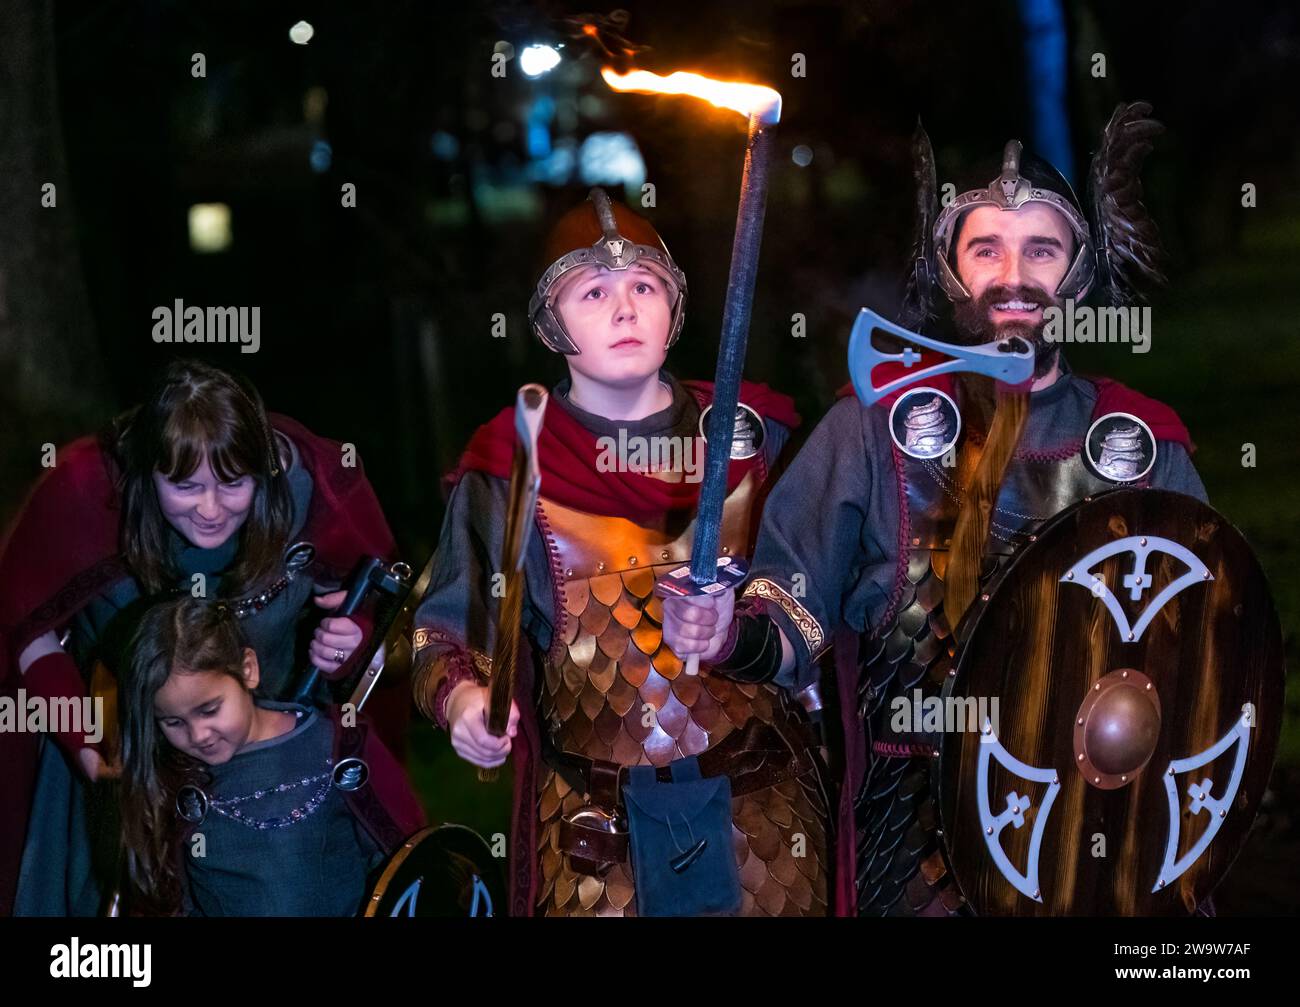 Up Helly Aa’ Jarl Squad Vikings at Torchlight Procession, Hogmanay New Year's event, Edinburgh, Scotland, UK Stock Photo